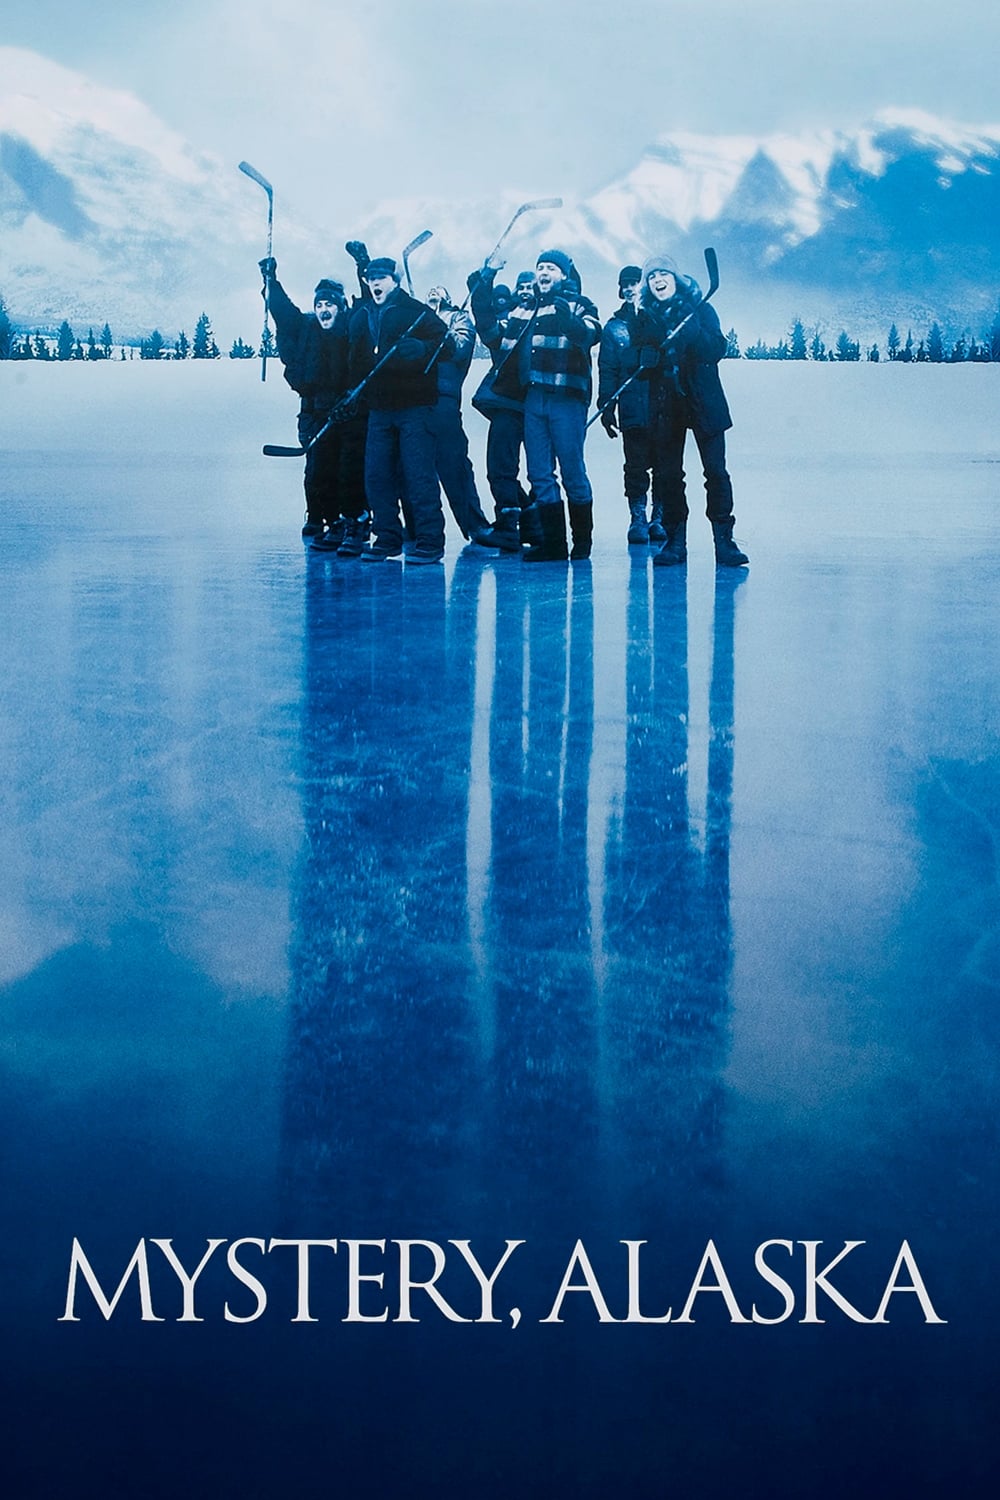 Mystery, Alaska (1999)